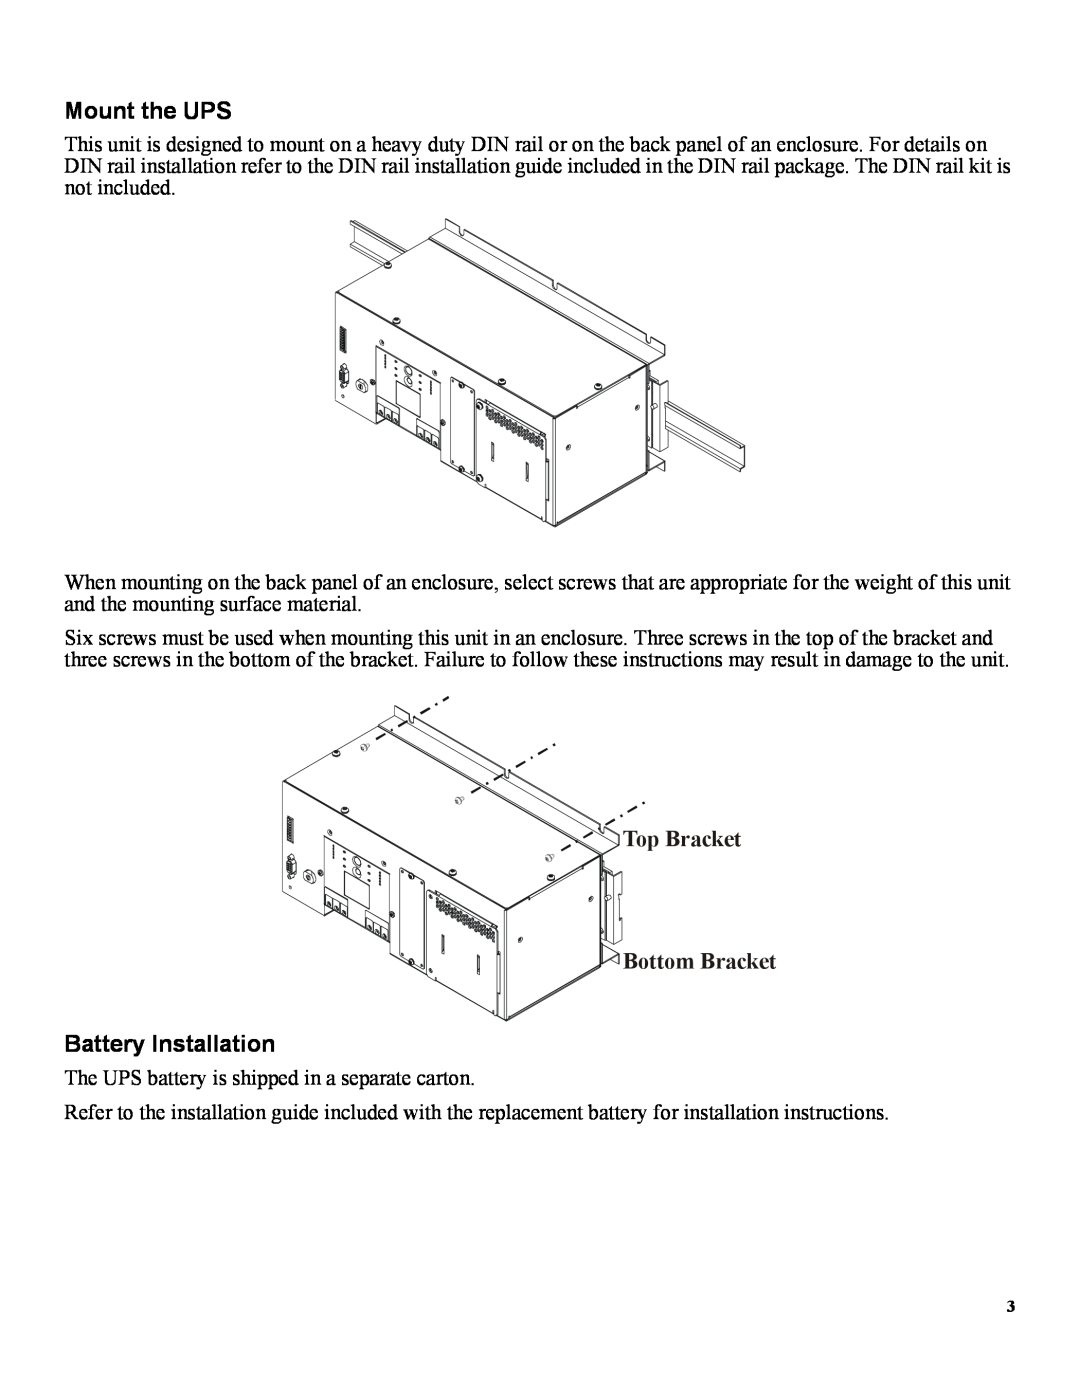 American Power Conversion 1609 user manual Mount the UPS, Battery Installation, Top Bracket Bottom Bracket 